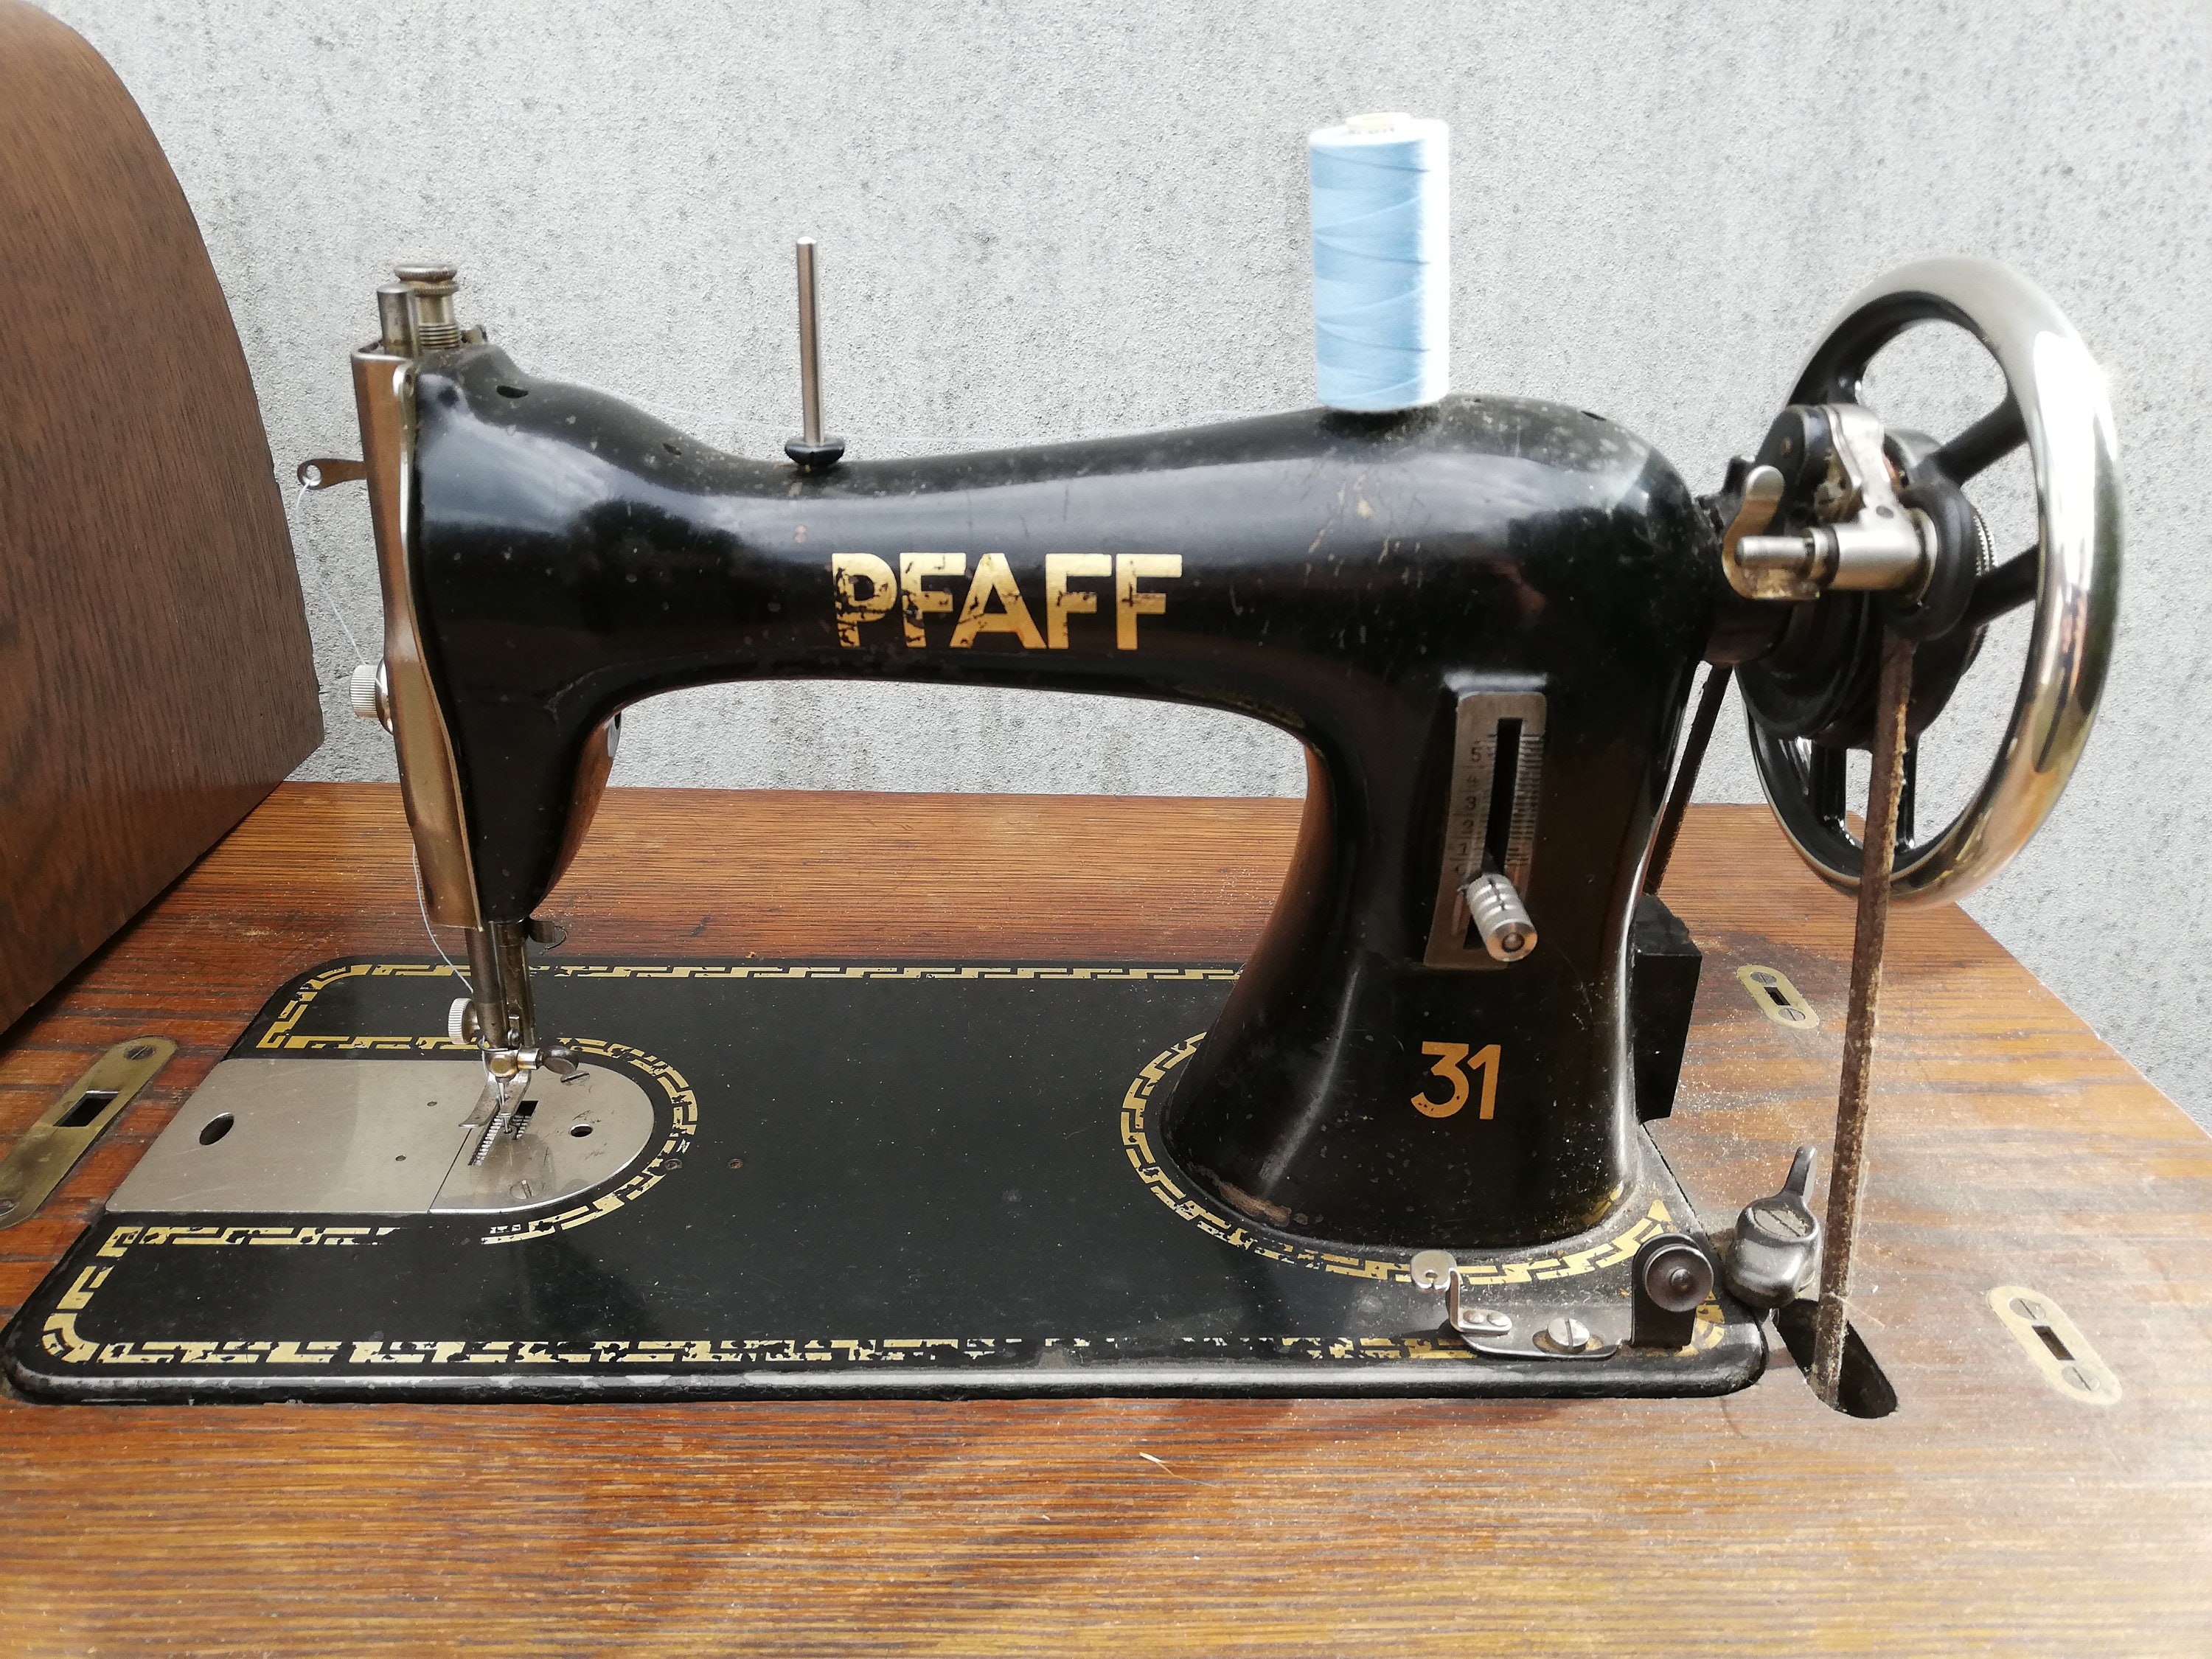 Pfaff North America - Awesome vintage PFAFF machine! #Regrann from